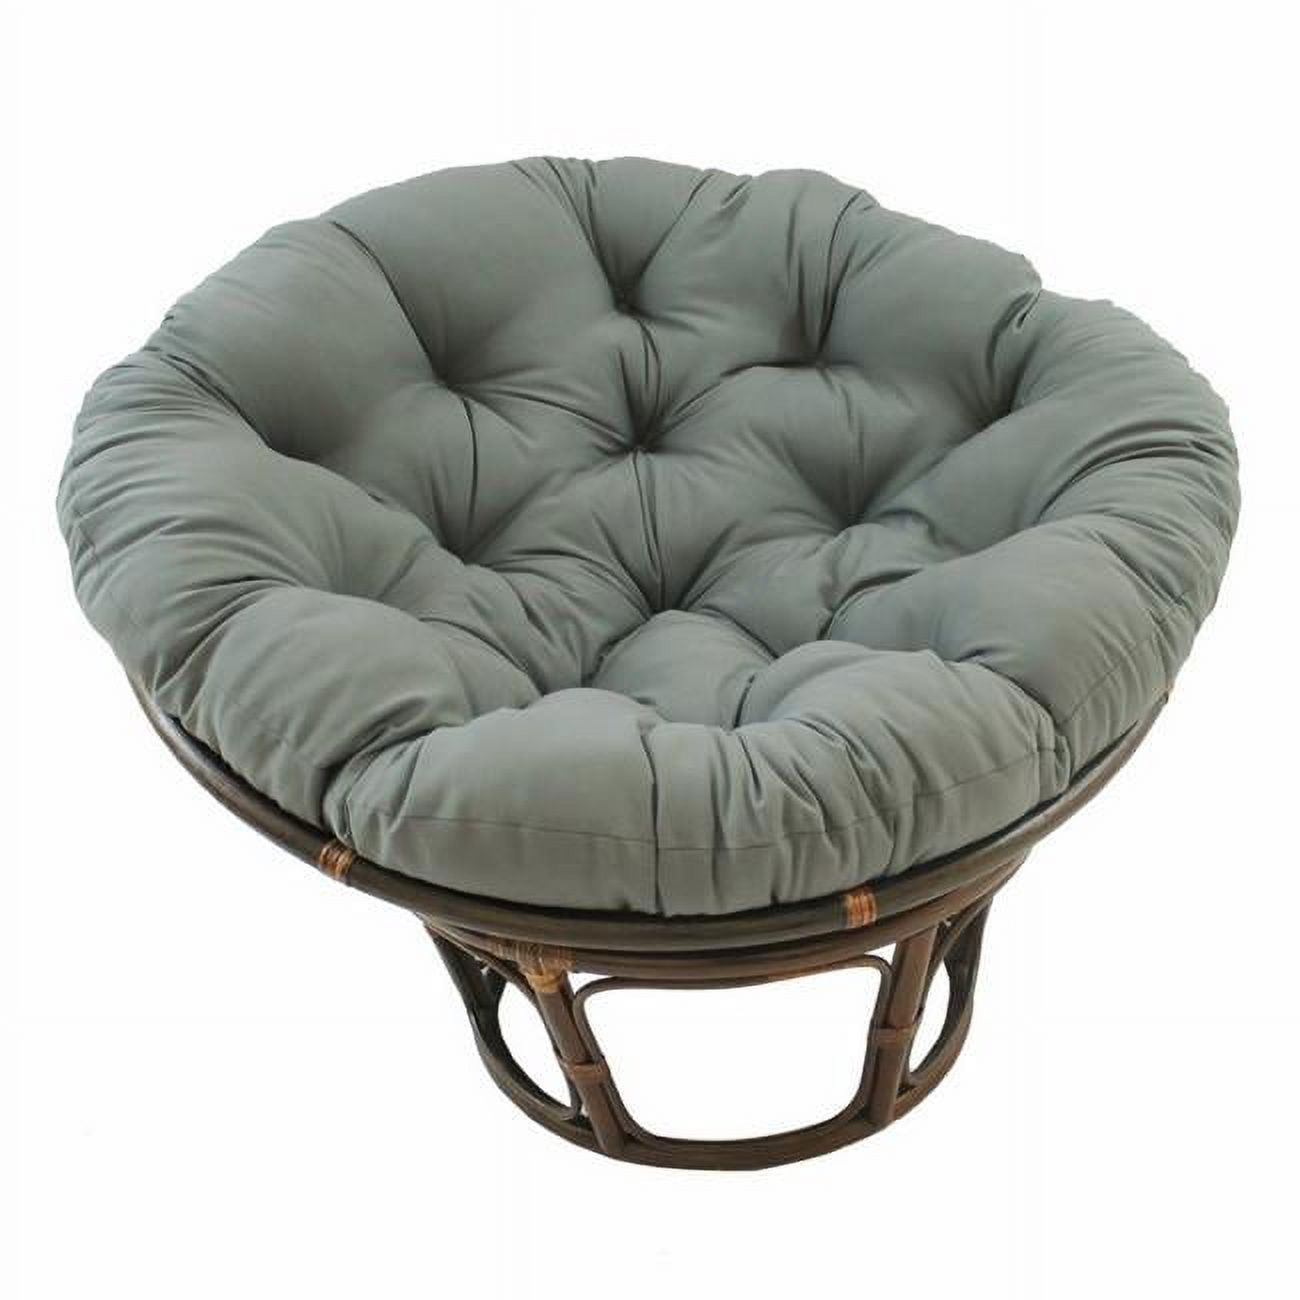 International Caravan 42" Rattan Papasan Chair with Solid Twill Cushion in Grey - image 1 of 10